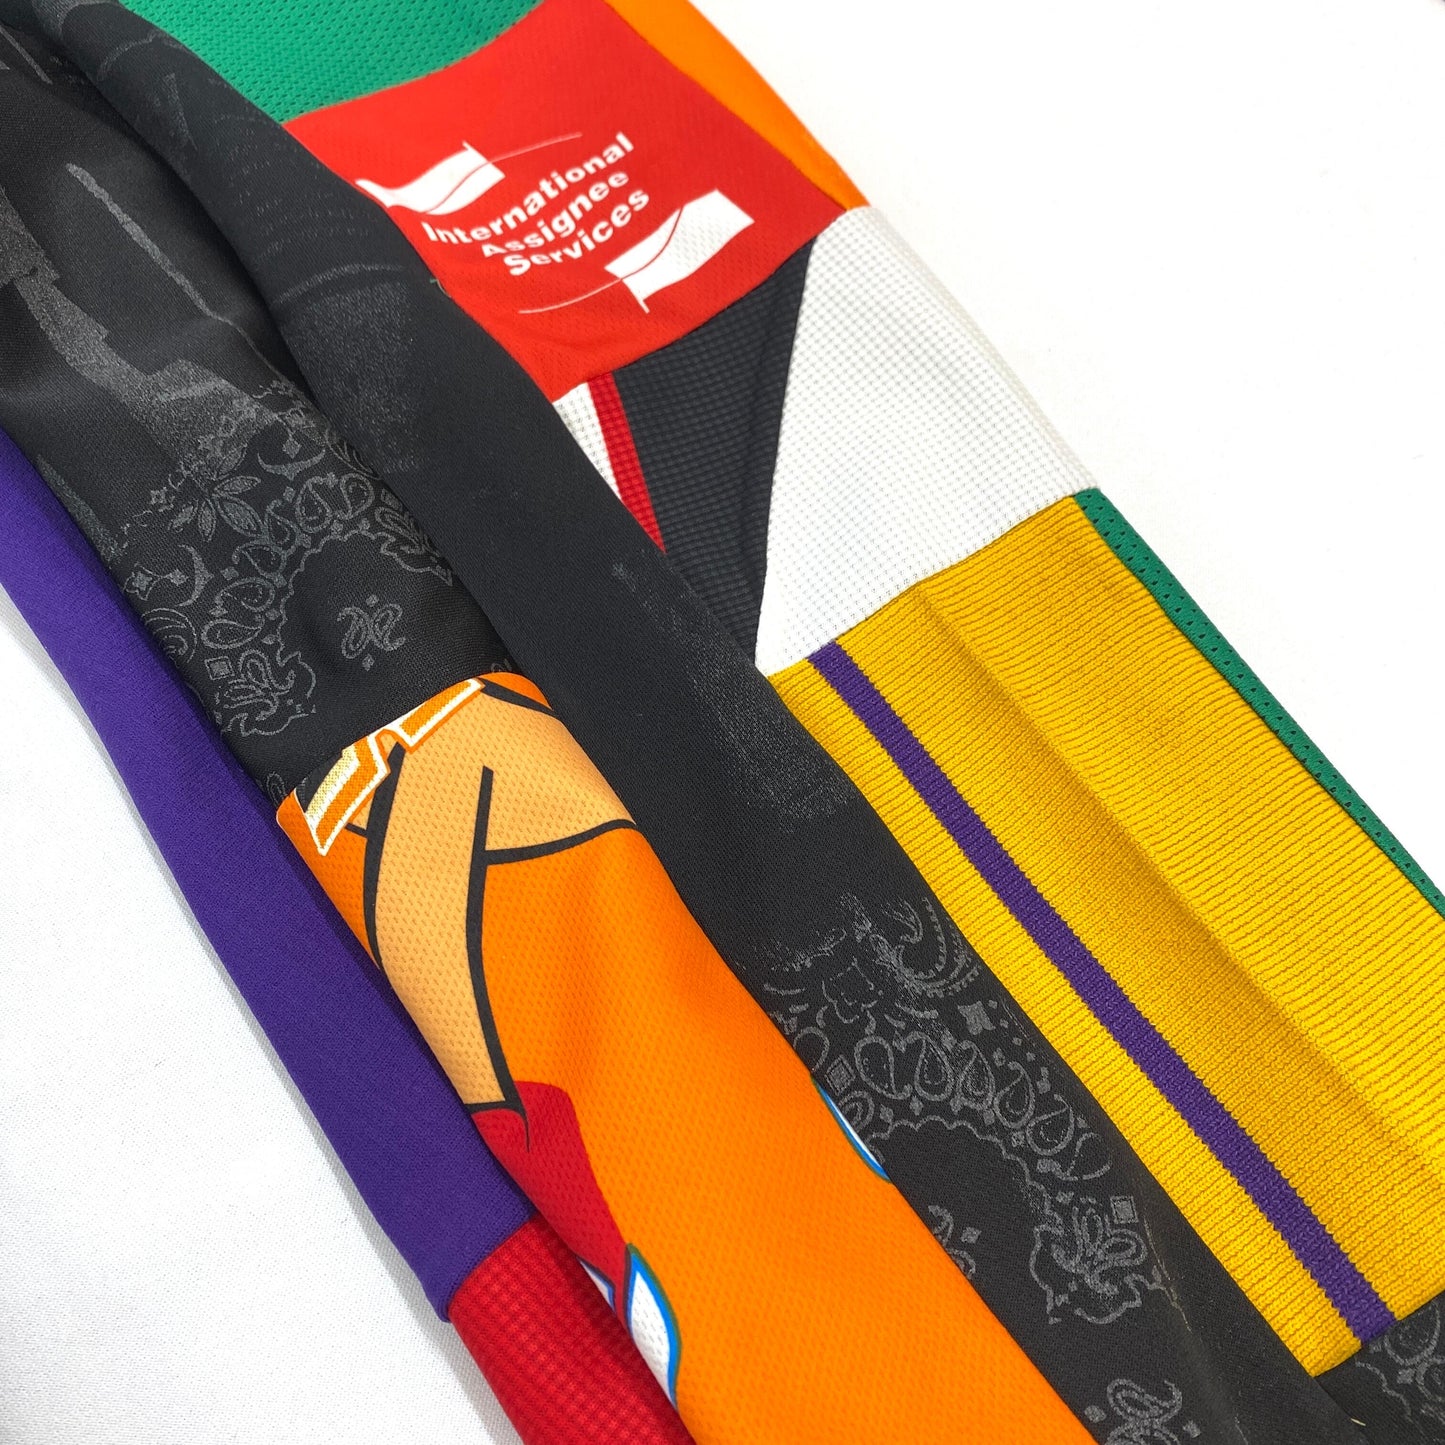 Bespoke Hypebeast Japanese Vintage Handmade Custom One and Only One Cote Mer Upcycle Sustainable Street Fashion Sports Jersey Uniform Celtics X Kimono Remake Pants Bottoms ( Size : XL )